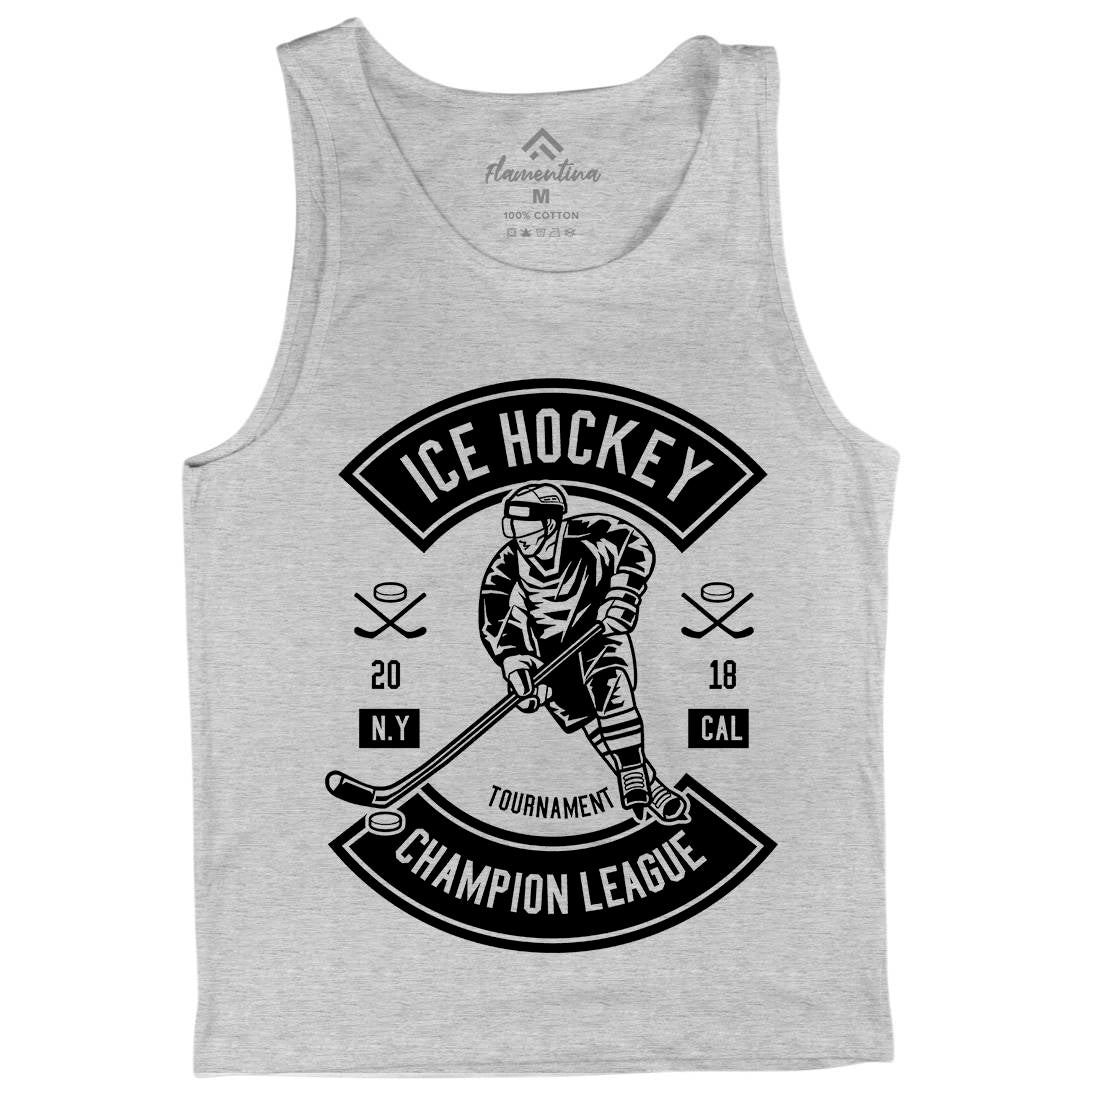 Ice Hockey Champion League Mens Tank Top Vest Sport B564